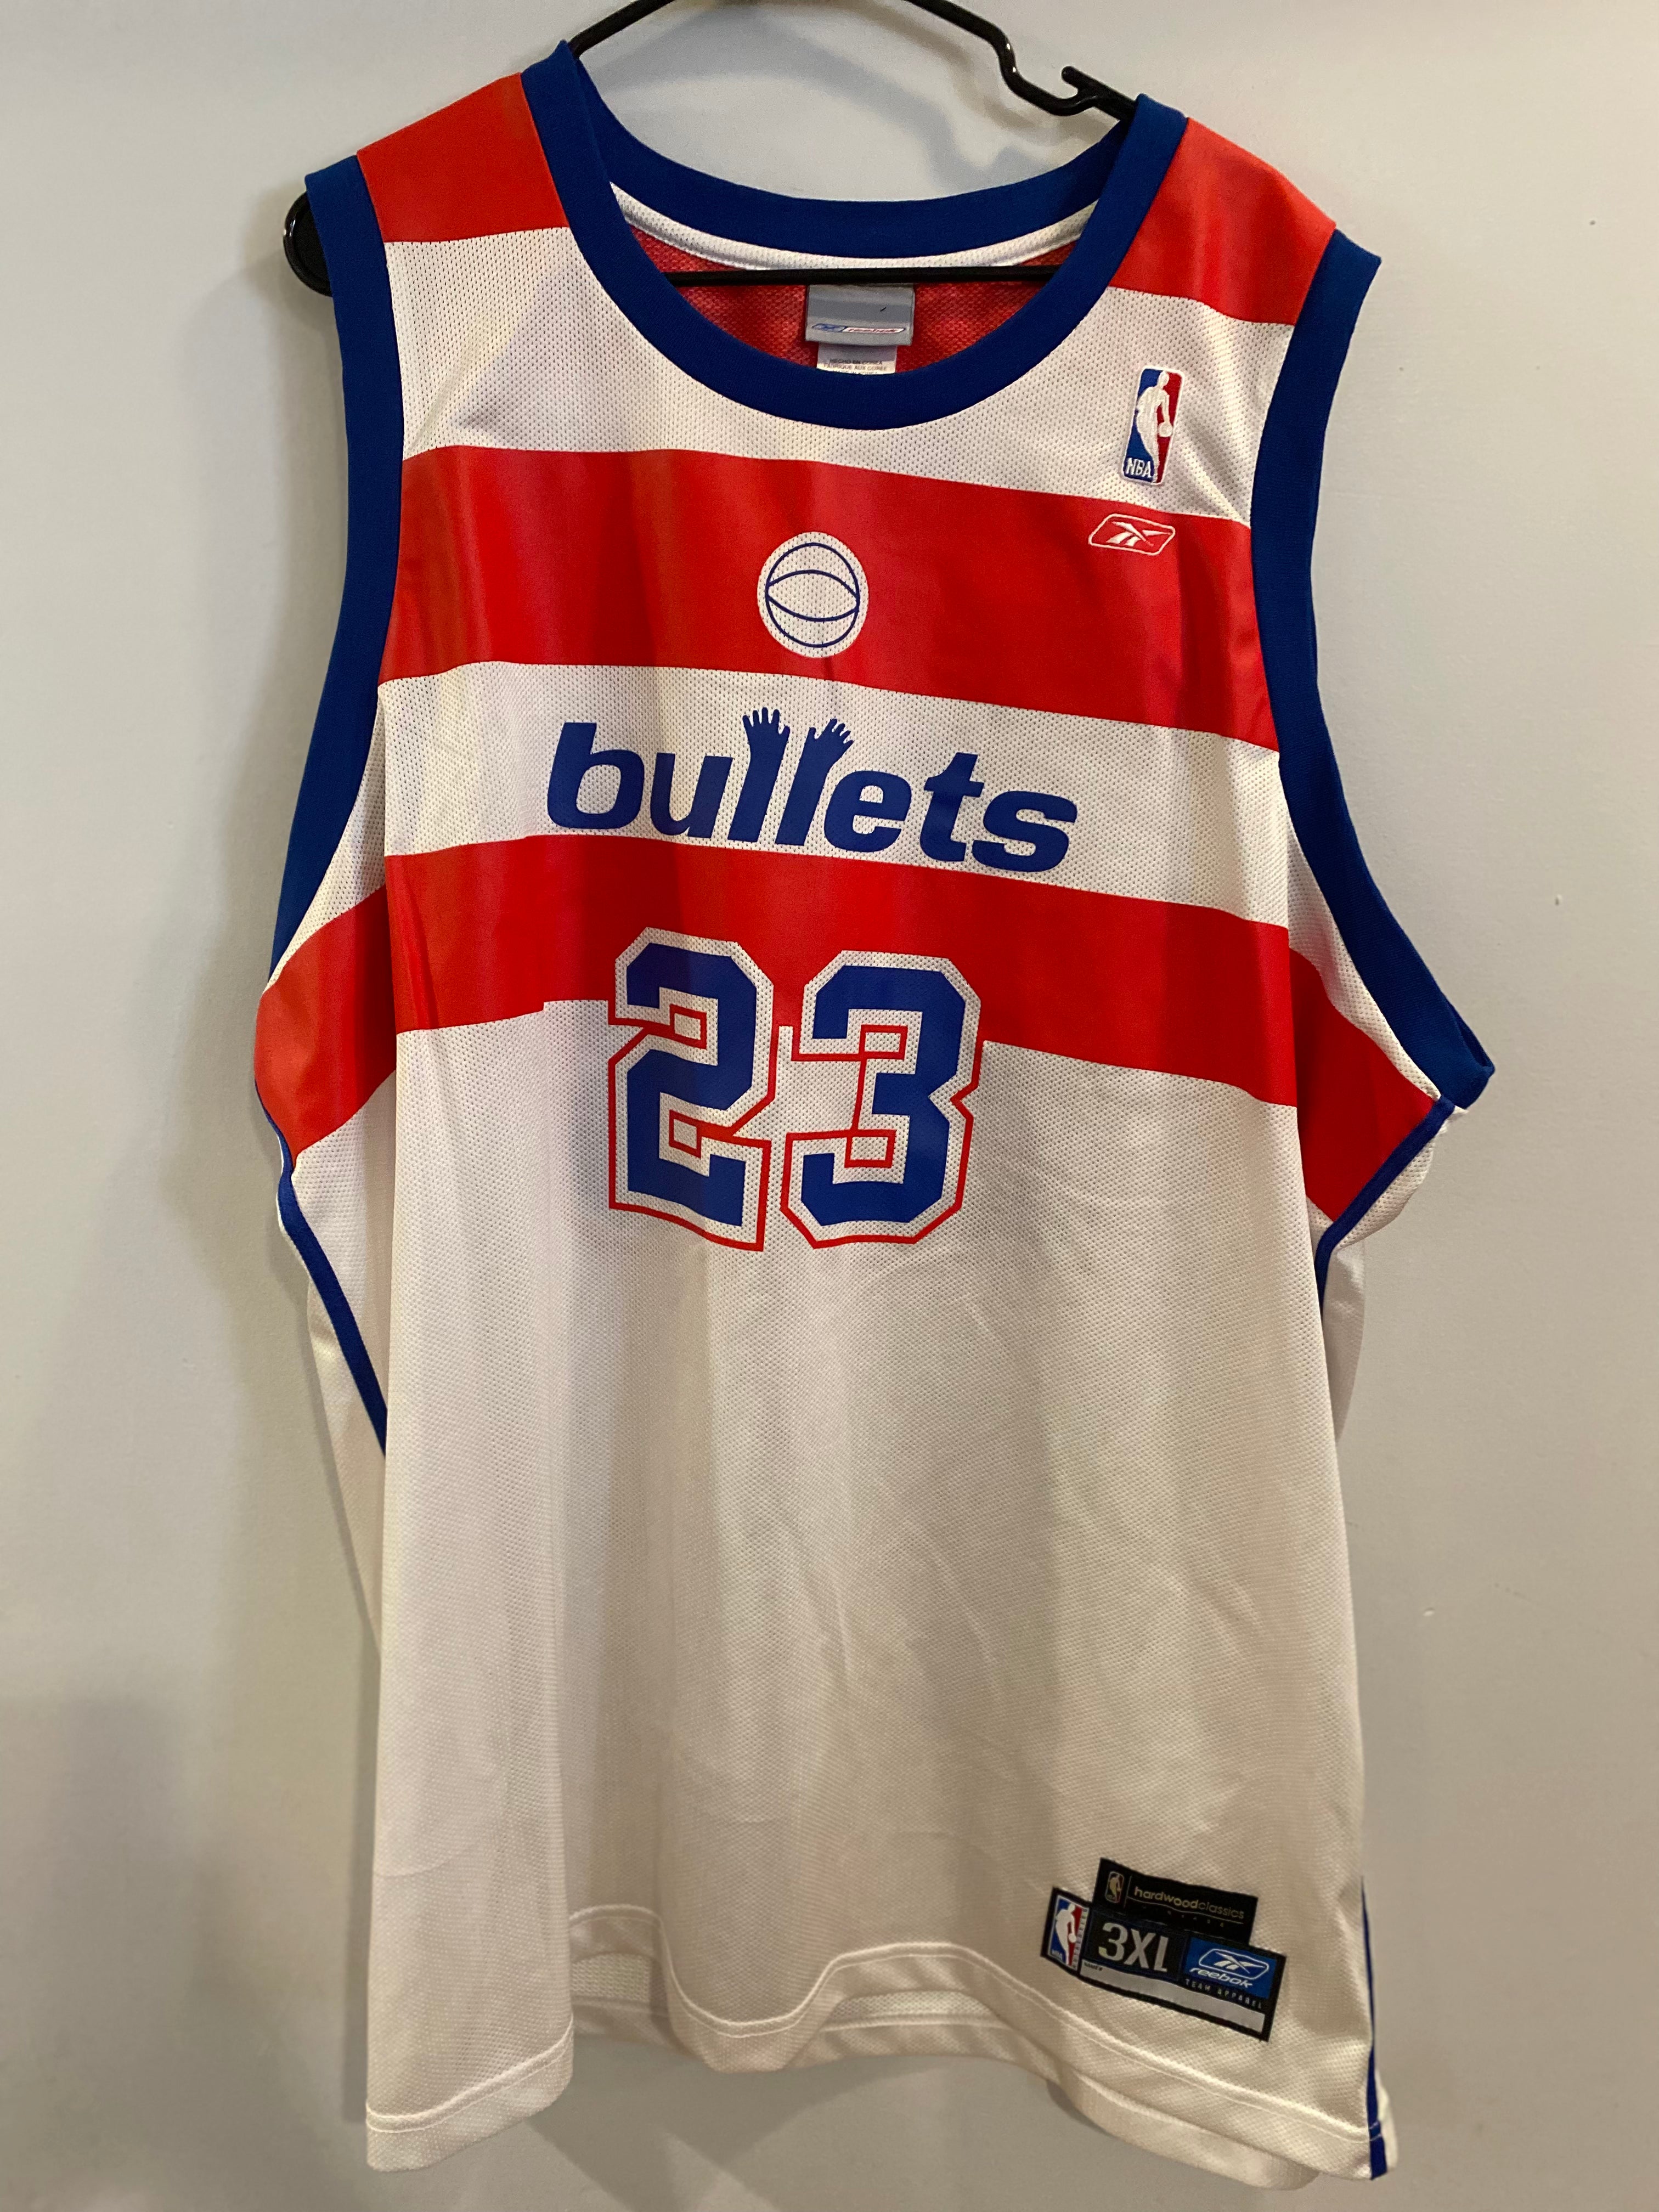 Washington Bullets Men NBA Jerseys for sale